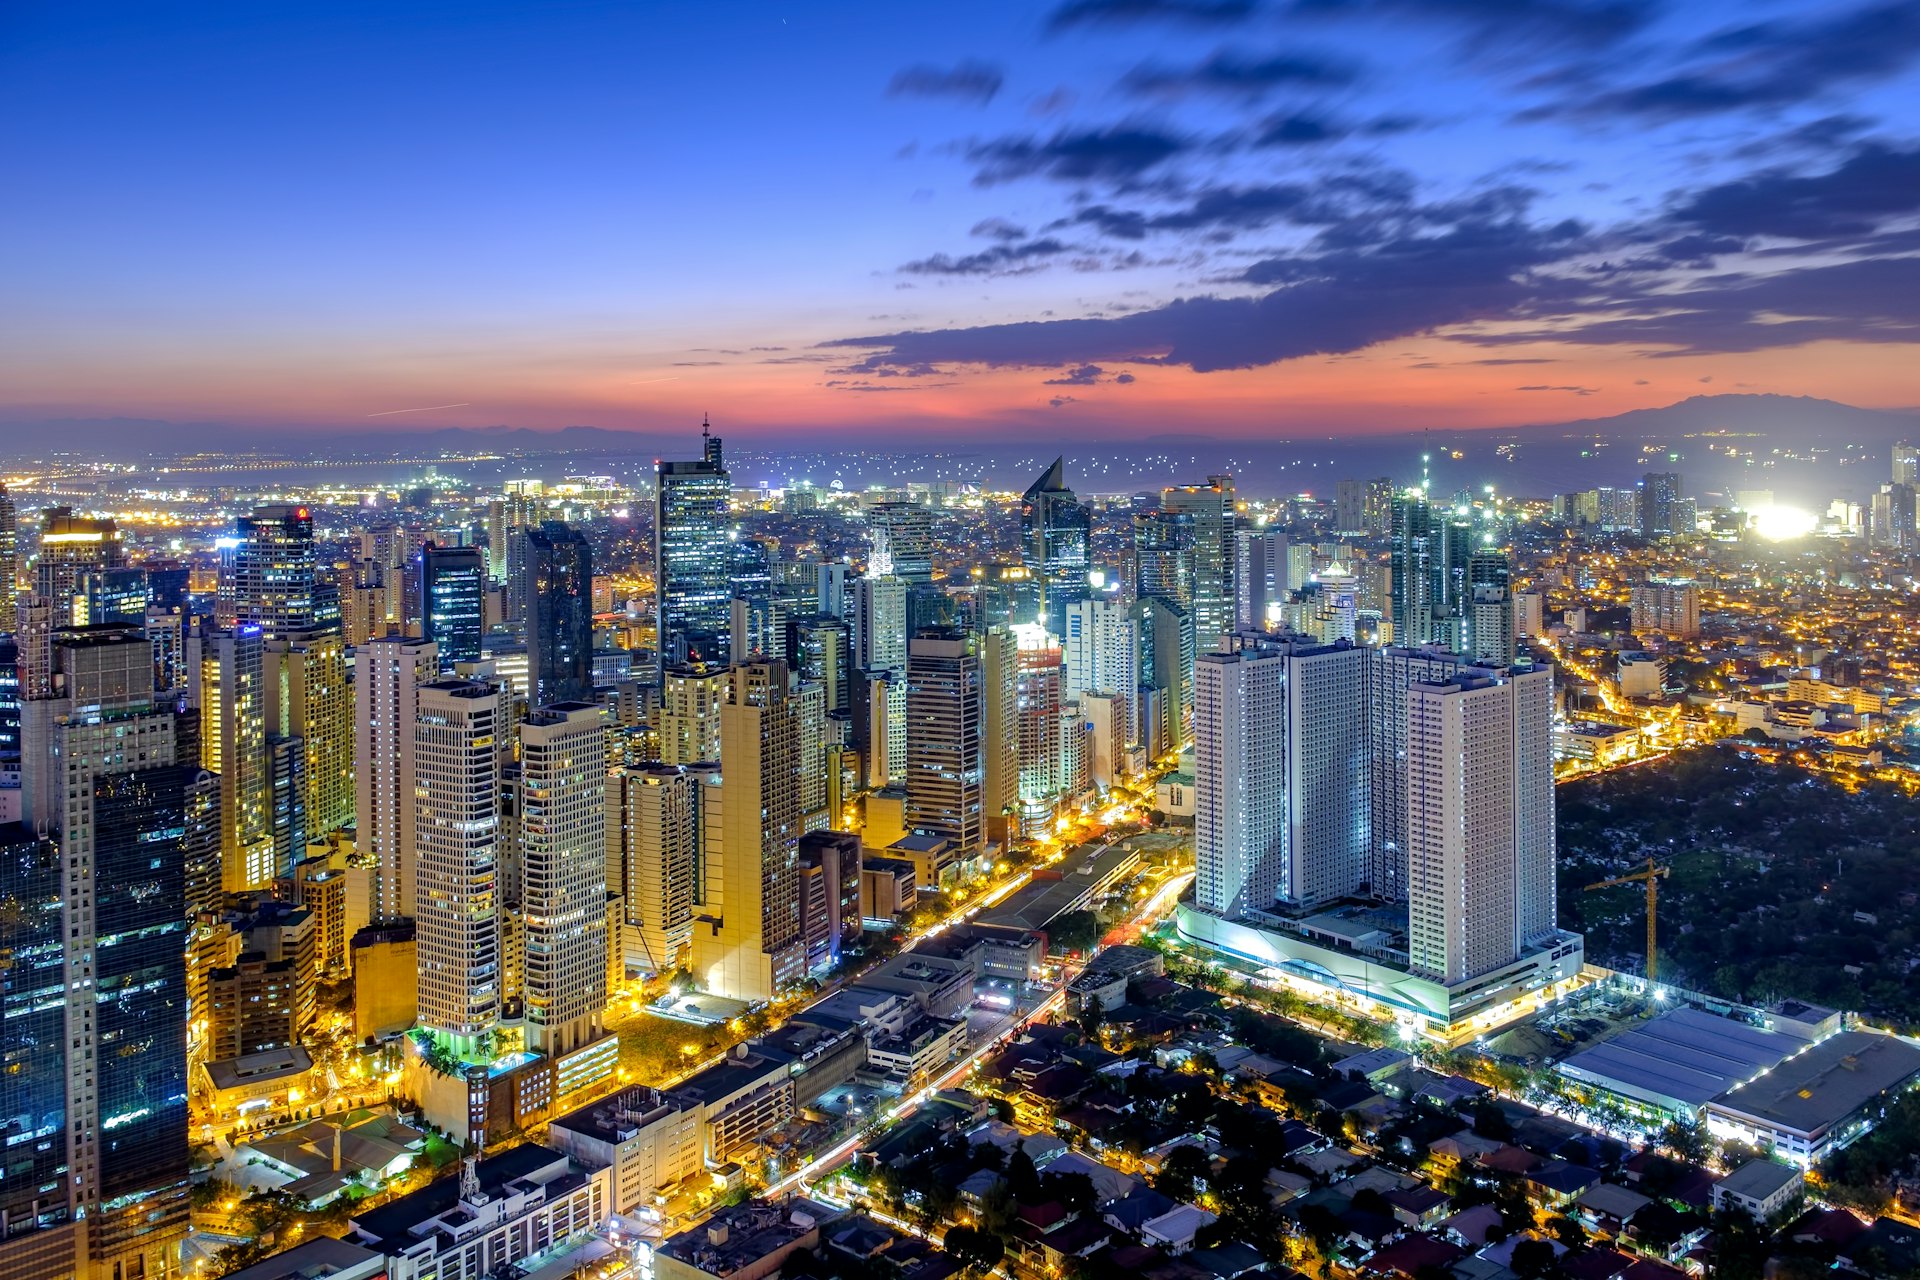 Sunset over Makati, a city in Metropolitan Manila